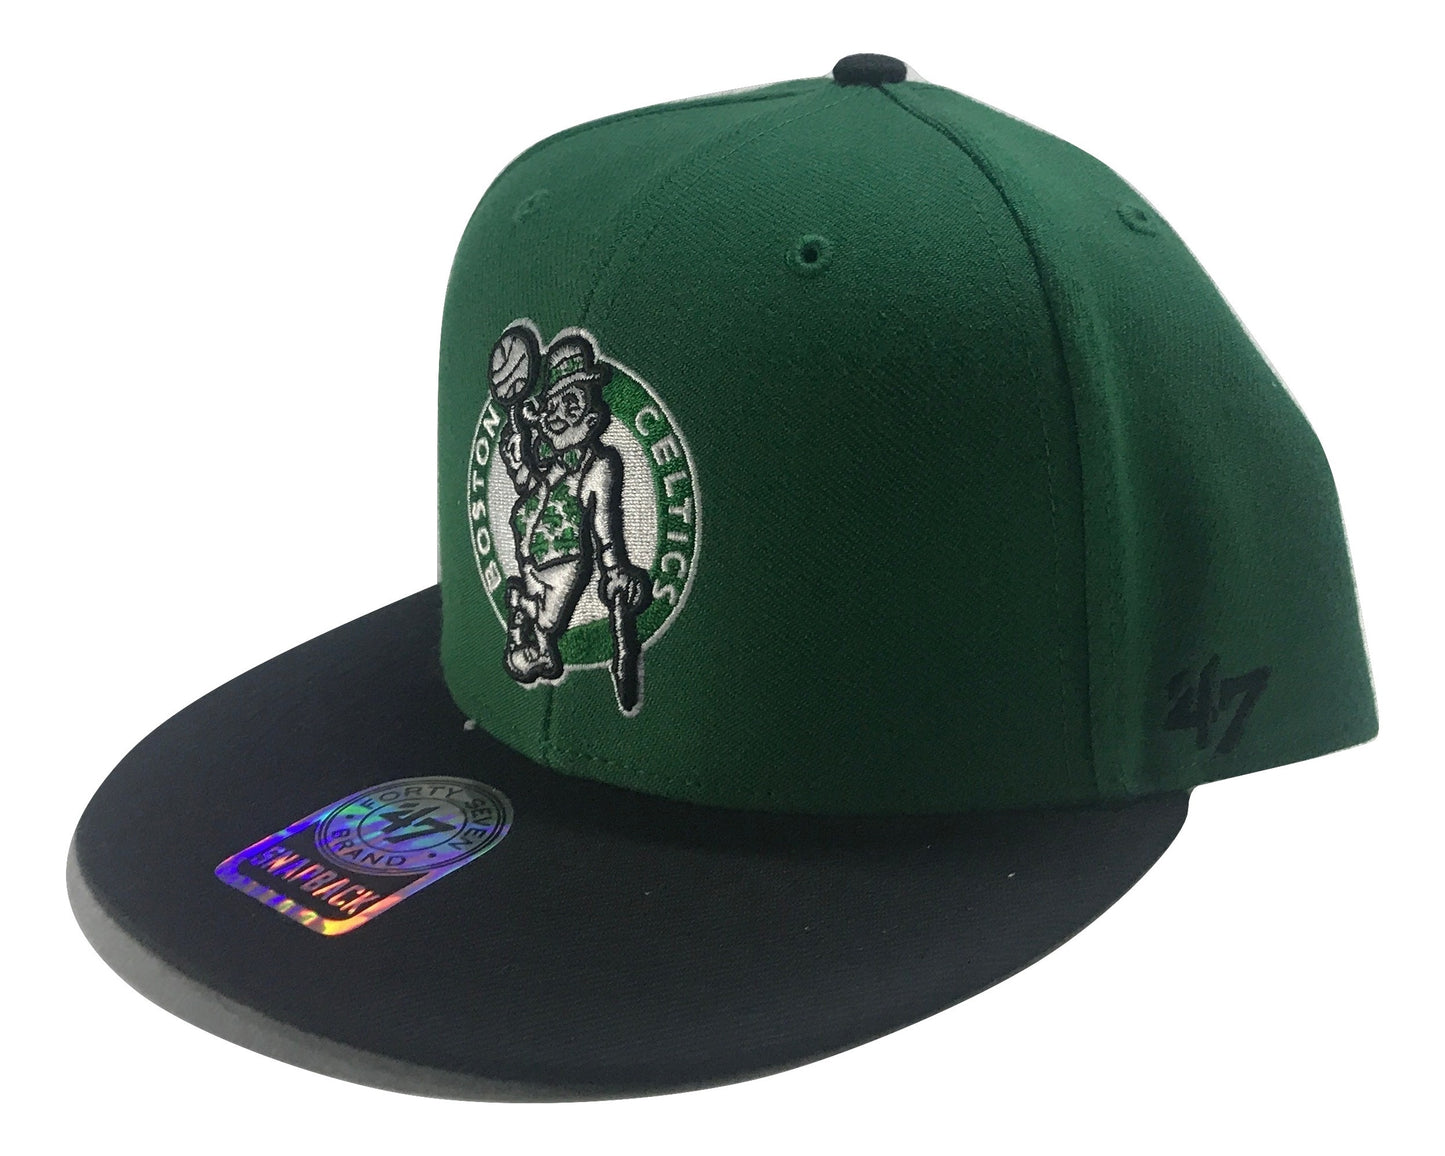 Boston Celtics (Green) Snapbacks